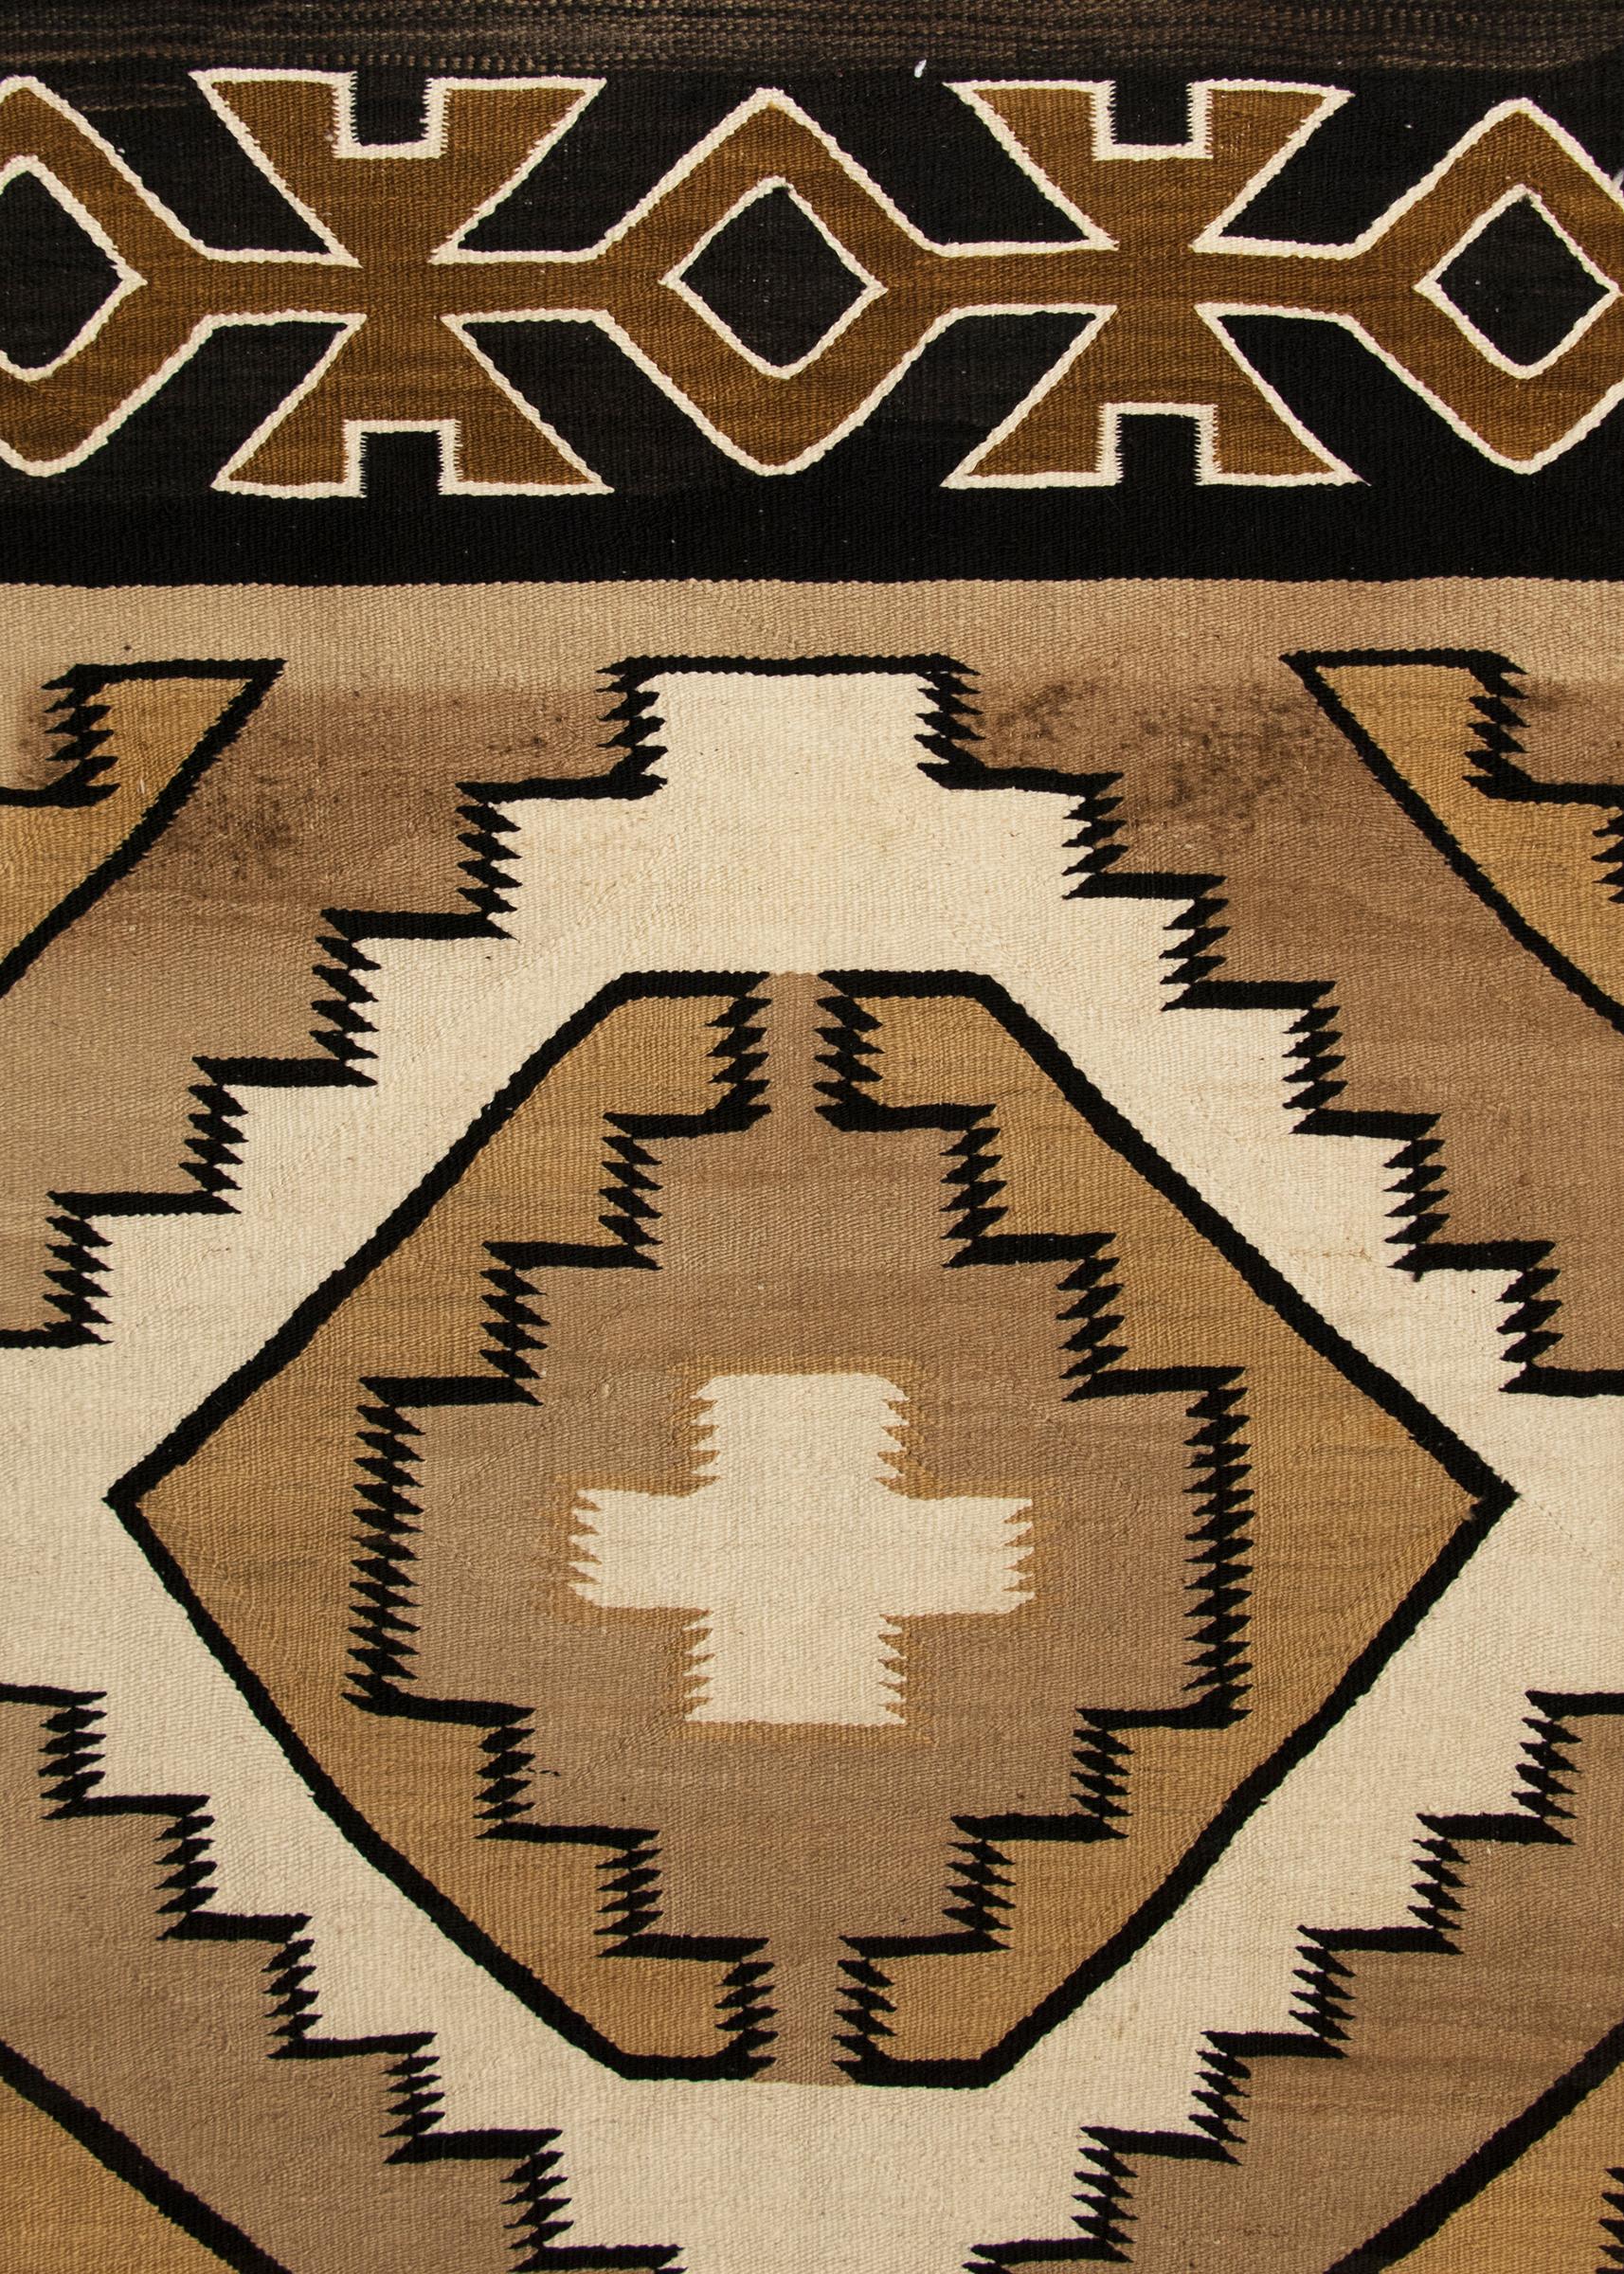 American Vintage Navajo Rug, Crystal Trading Post, circa 1930s-1950s, Brown, Camel, Ivory